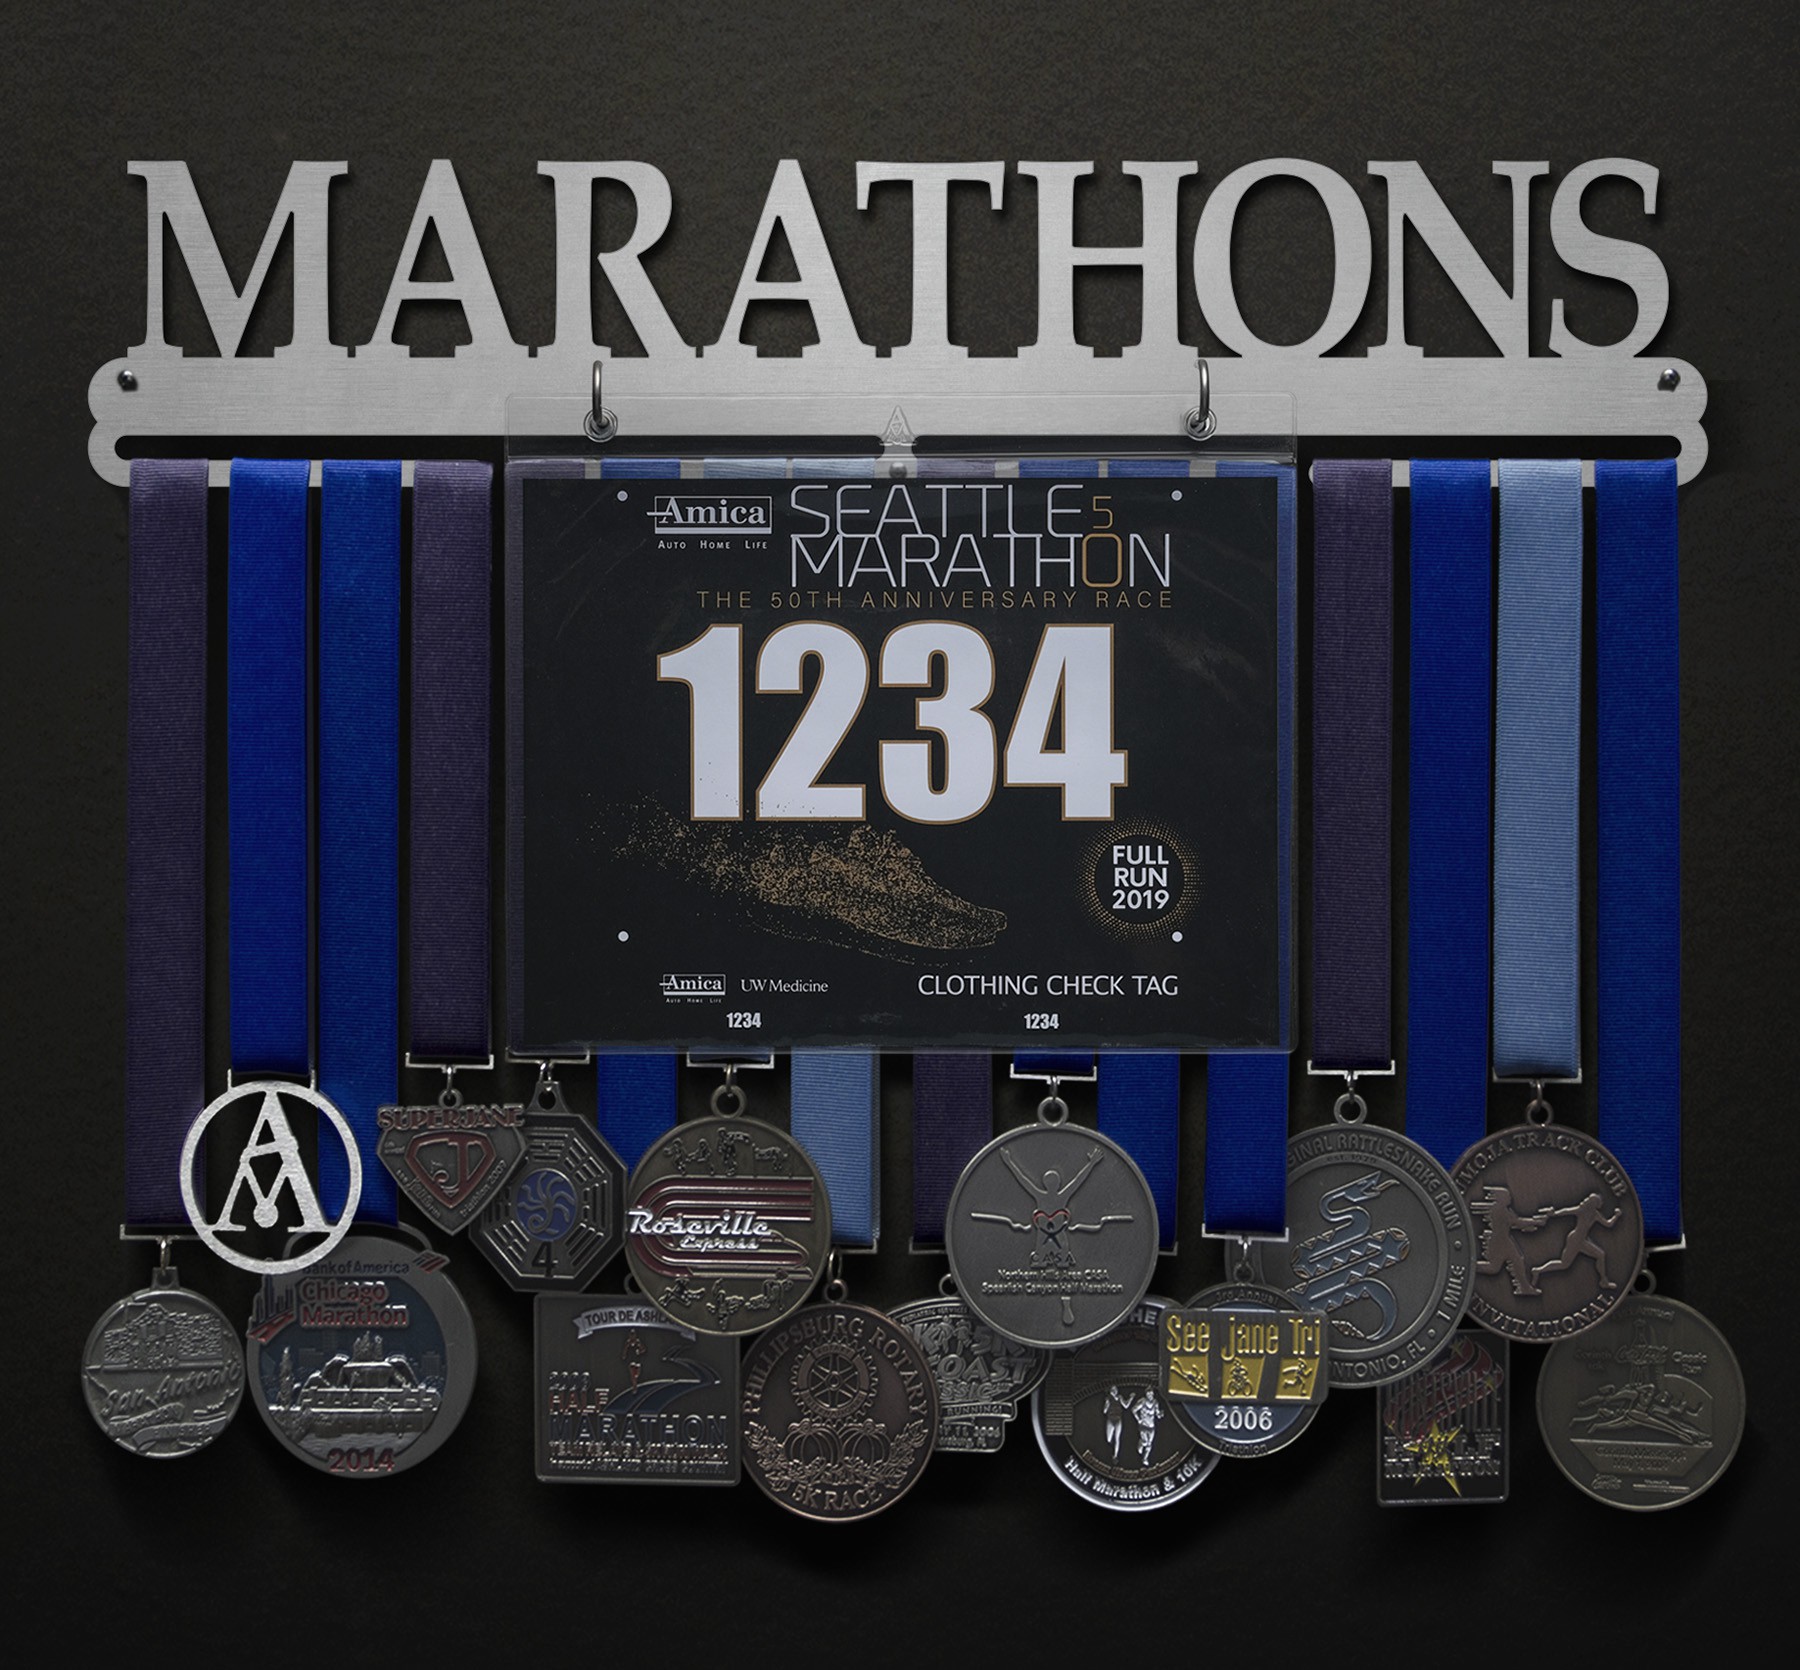 Marathons Bib and Medal Display